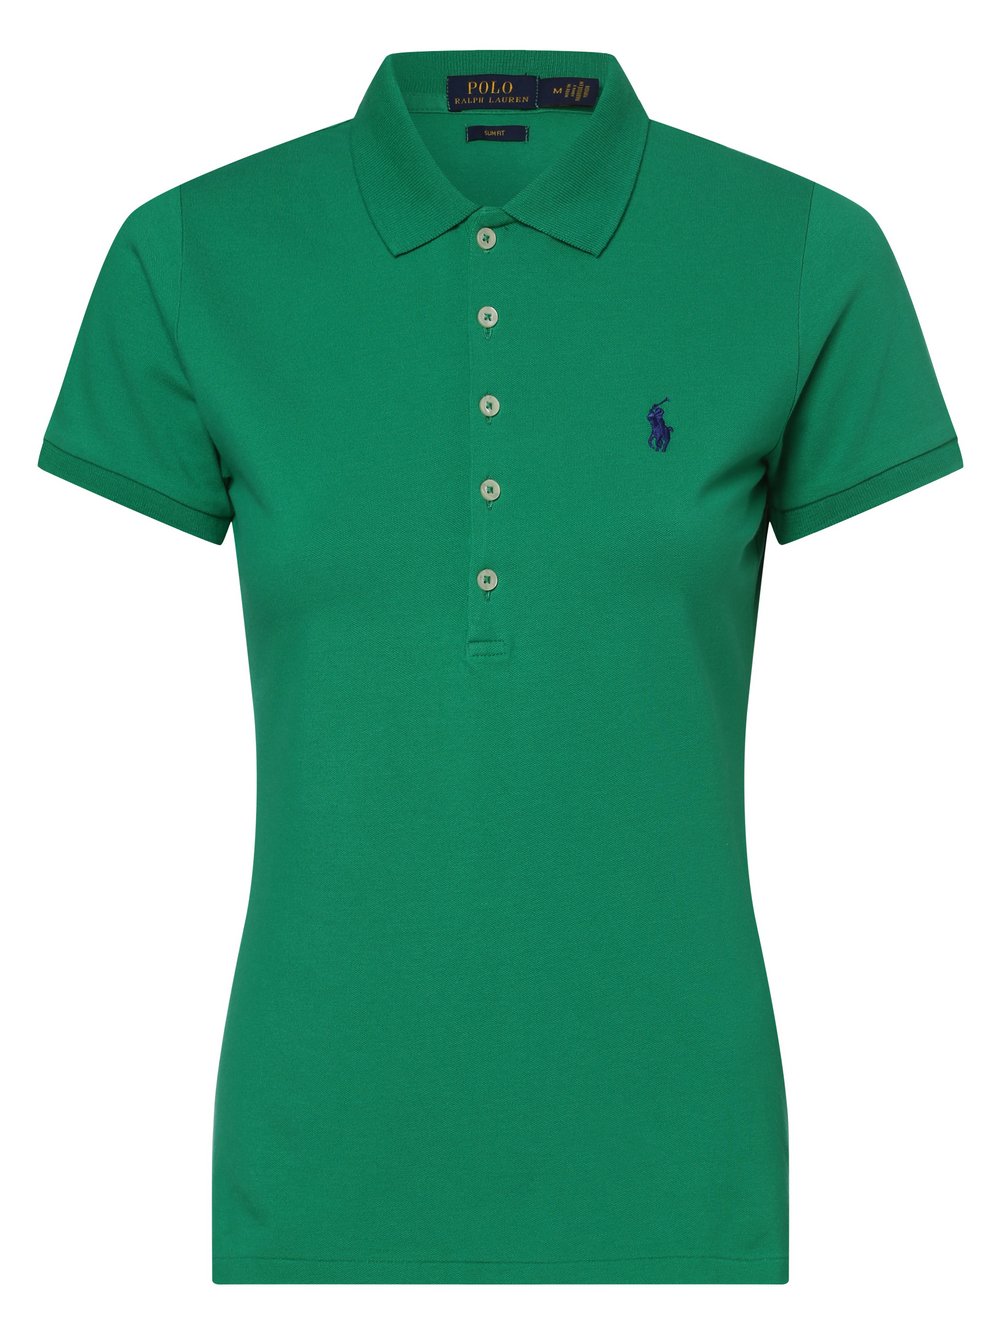 Polo Ralph Lauren - Damska koszulka polo – Slim fit, zielony